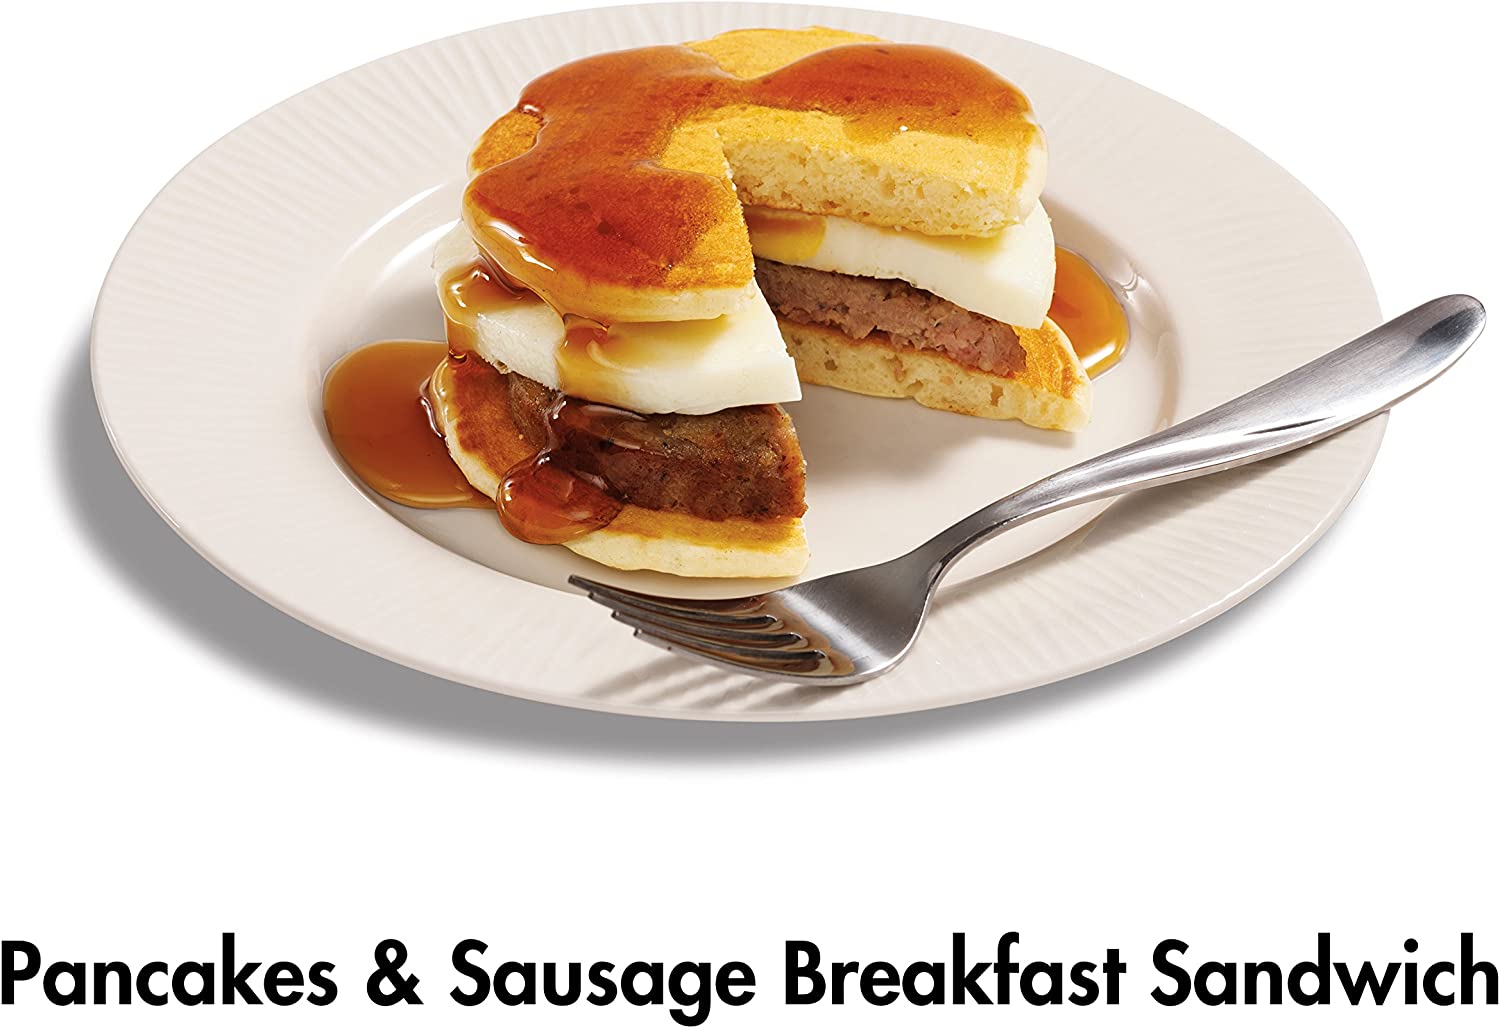 New Hamilton Beach Breakfast Sandwich Maker with Egg Cooker Ring Customize